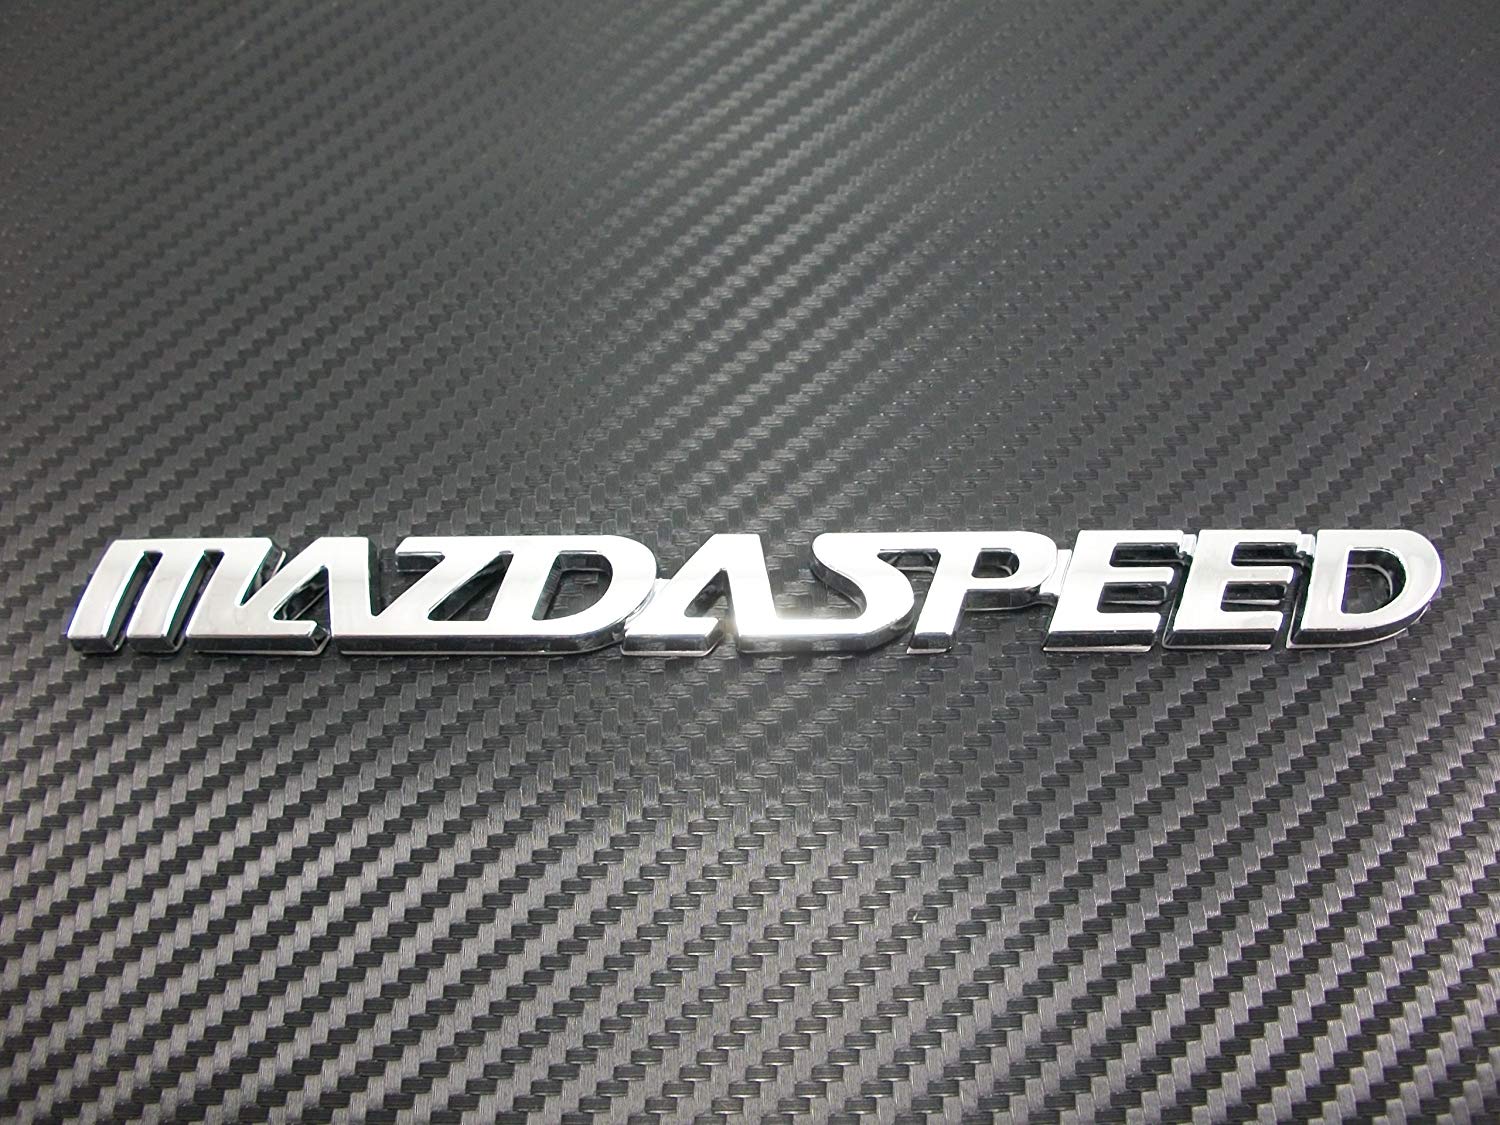 Mazdaspeed Logo - Amazon.com: MAZDASPEED Logo Sign Emblem Decal For Car Decoration ...